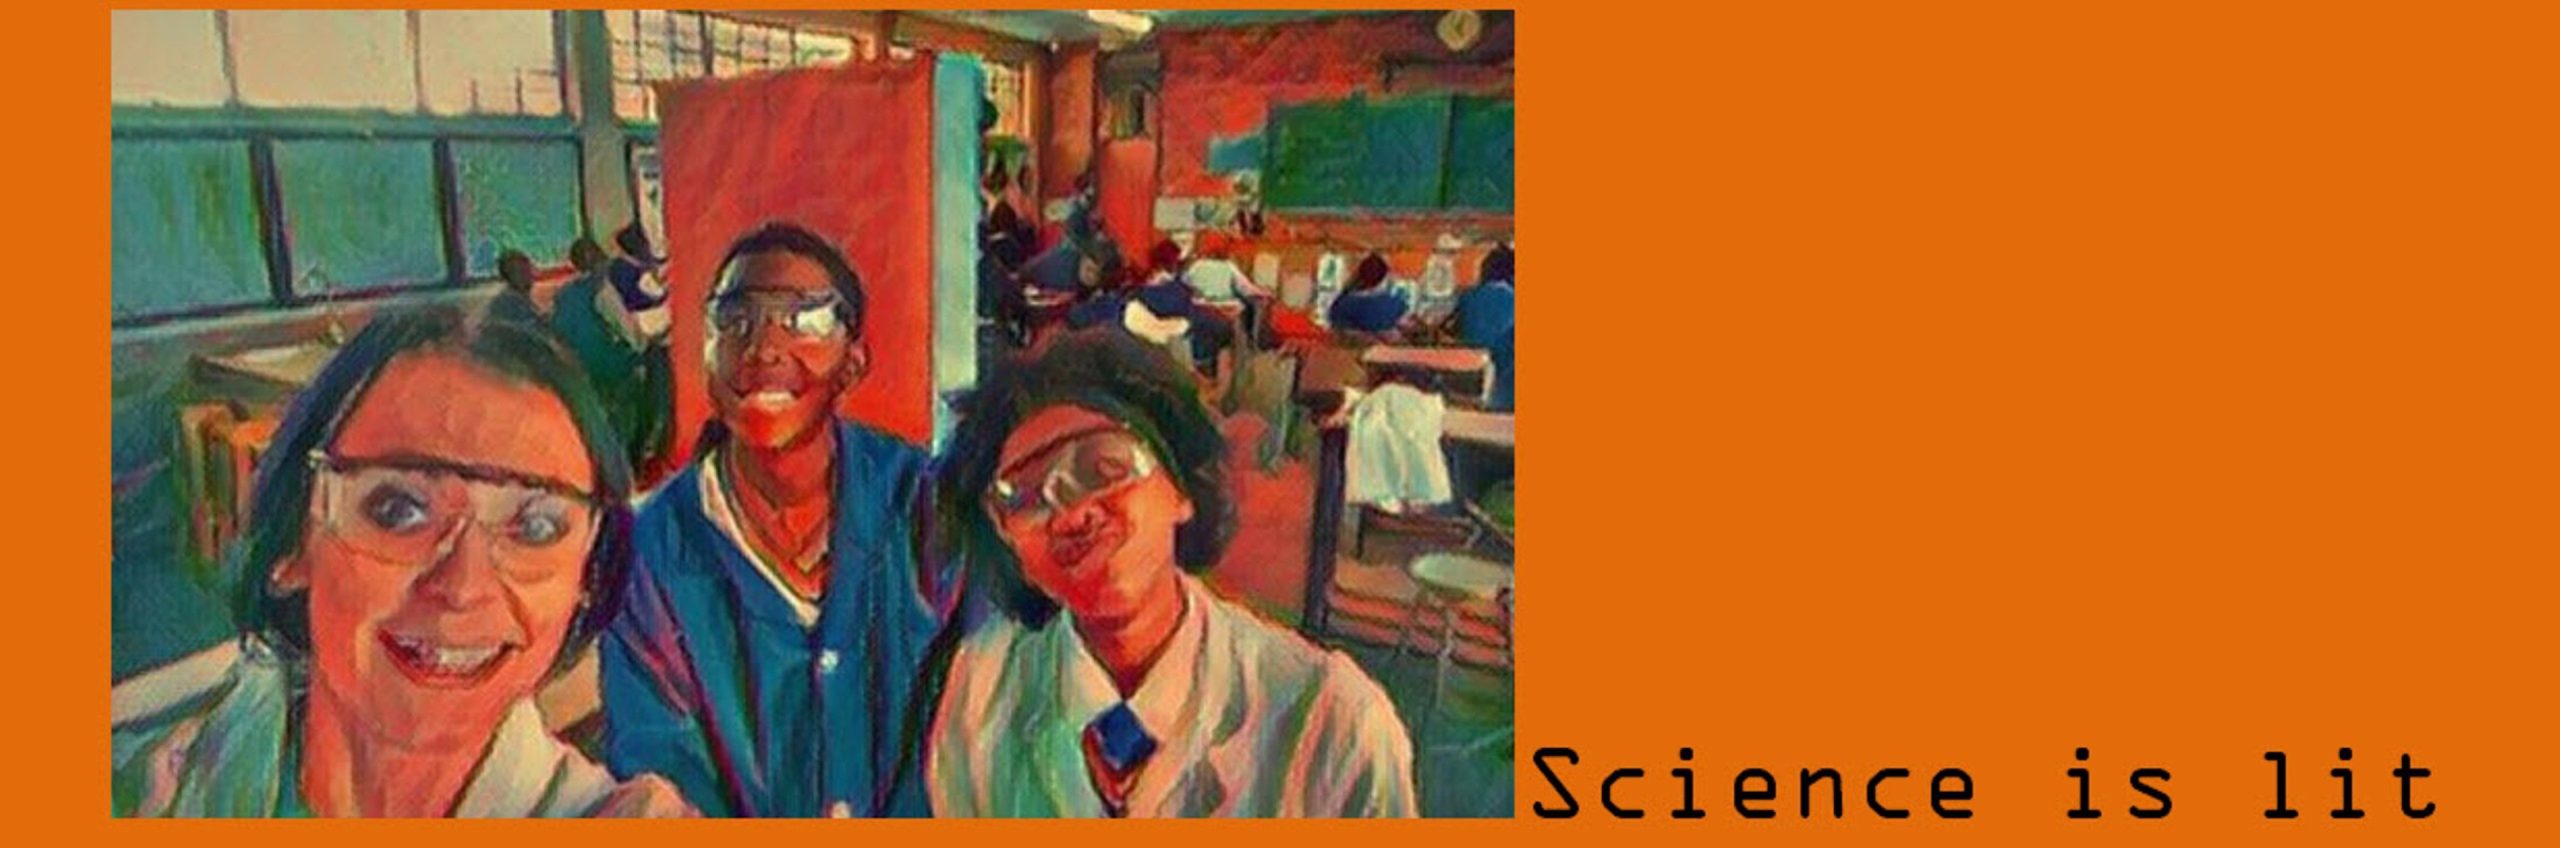 science_is_lit